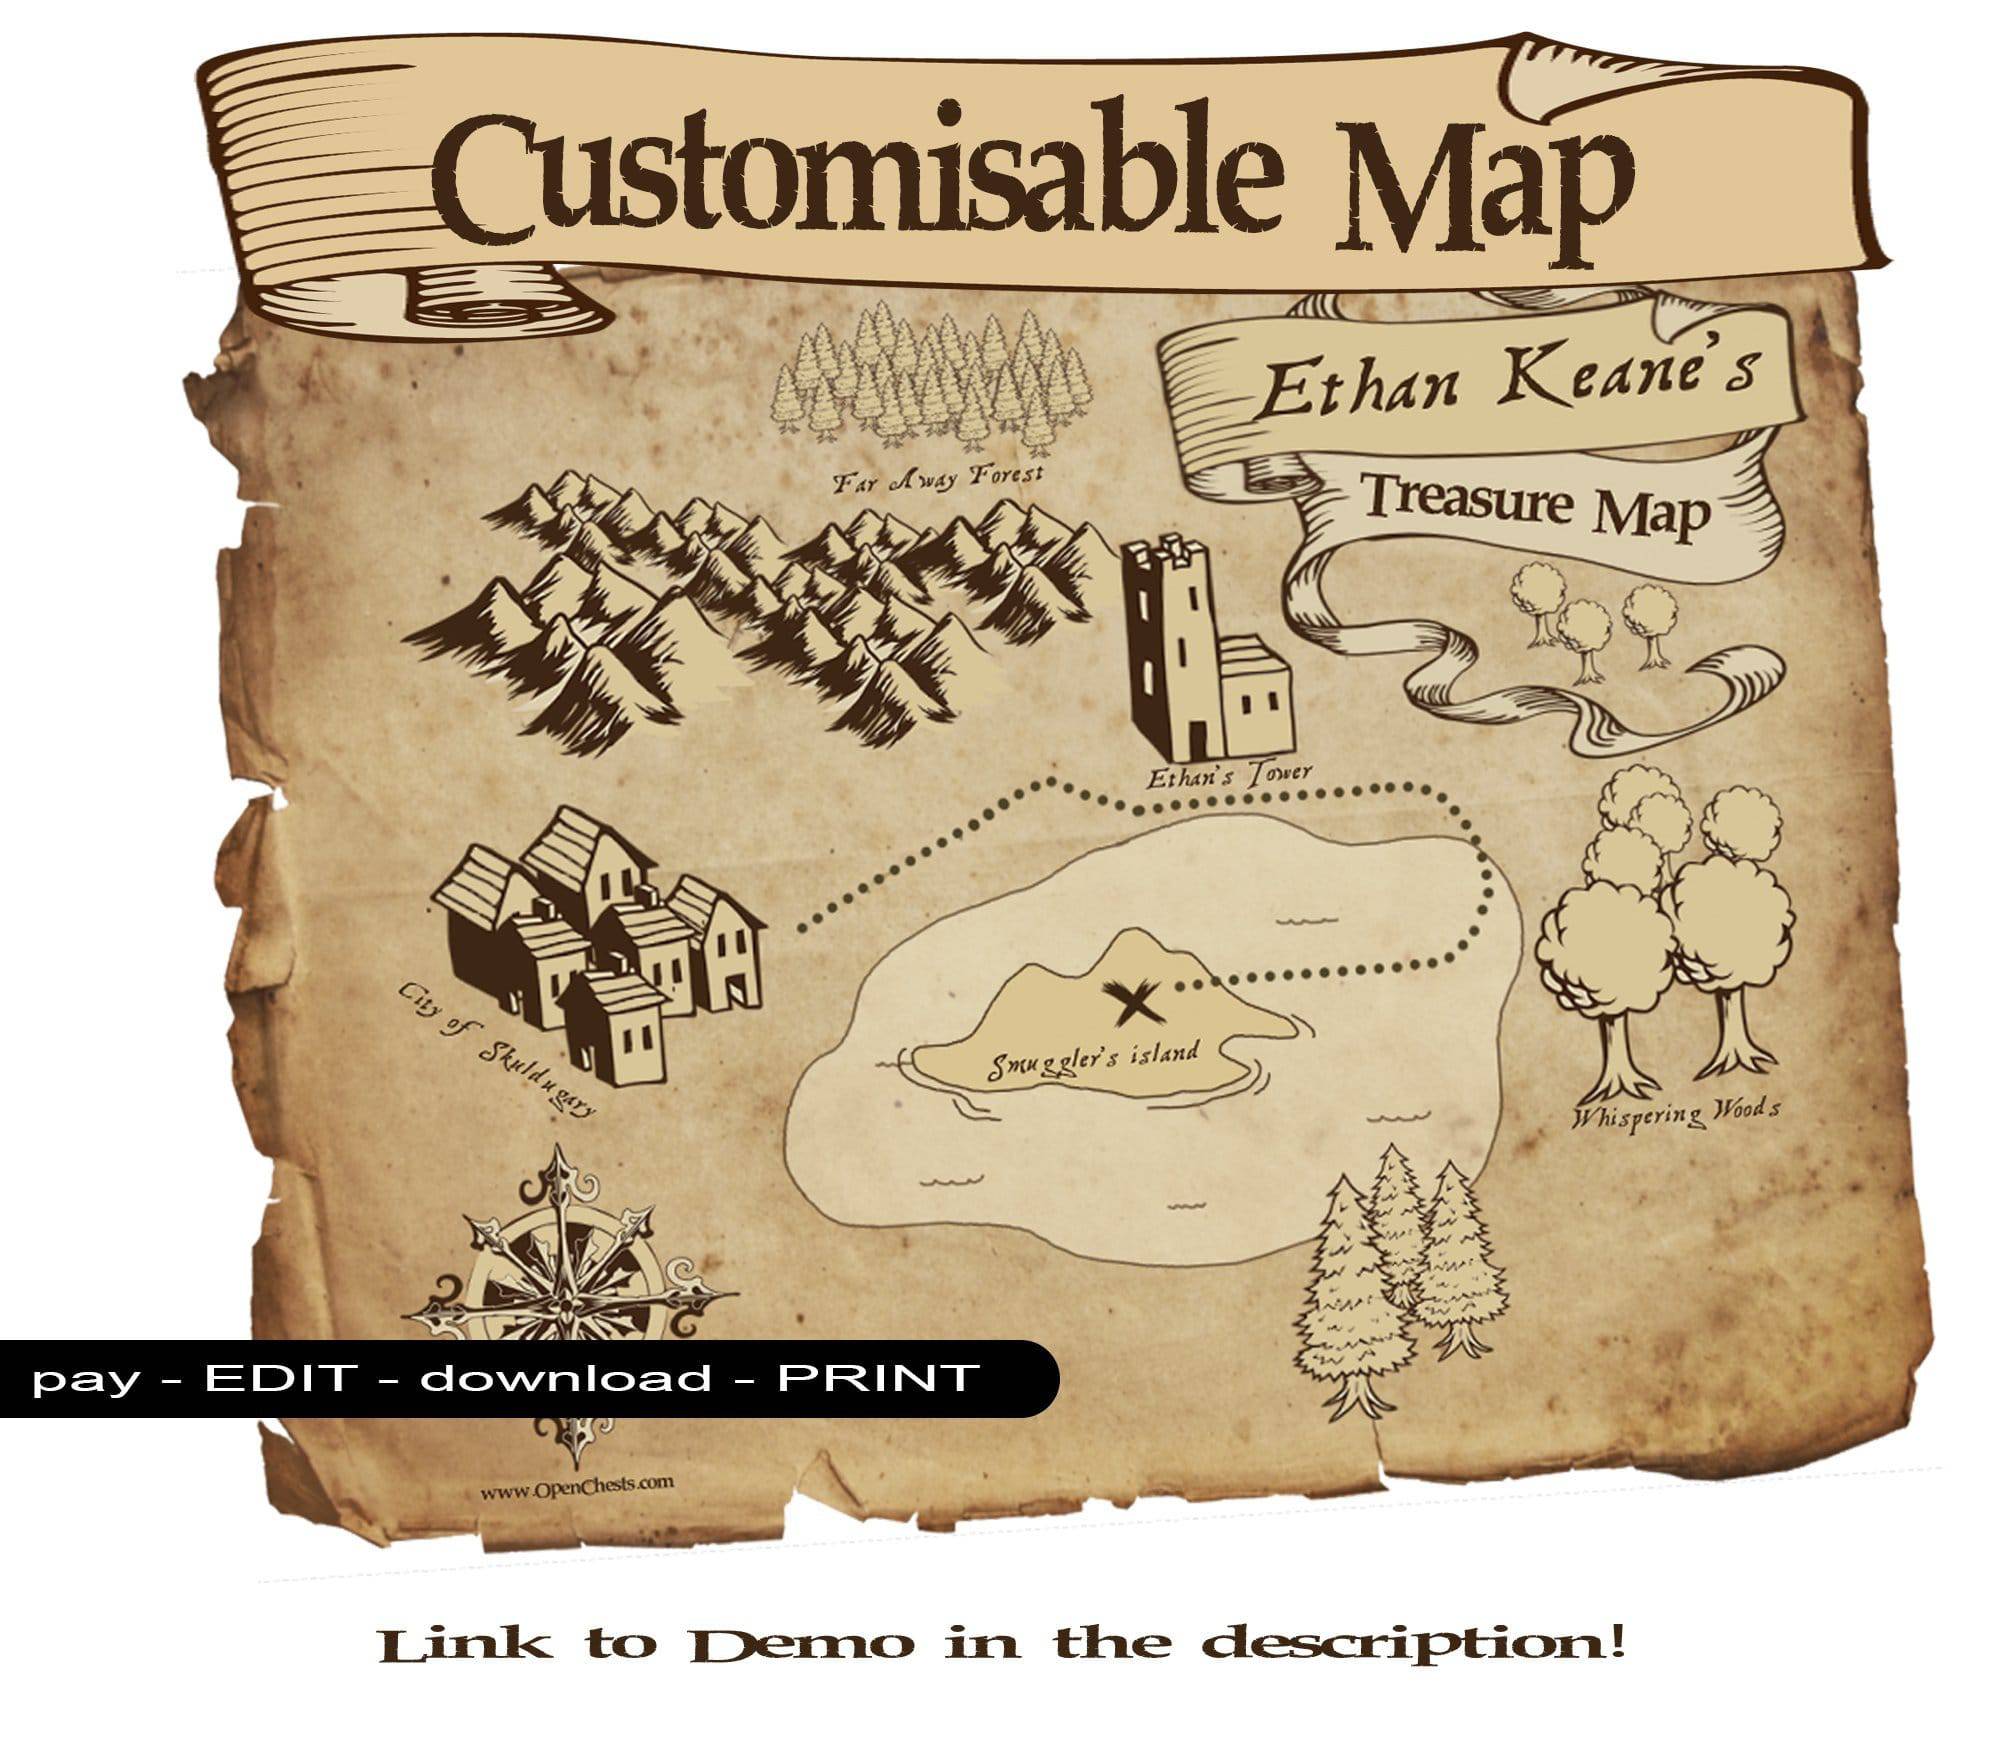 printable blank treasure map